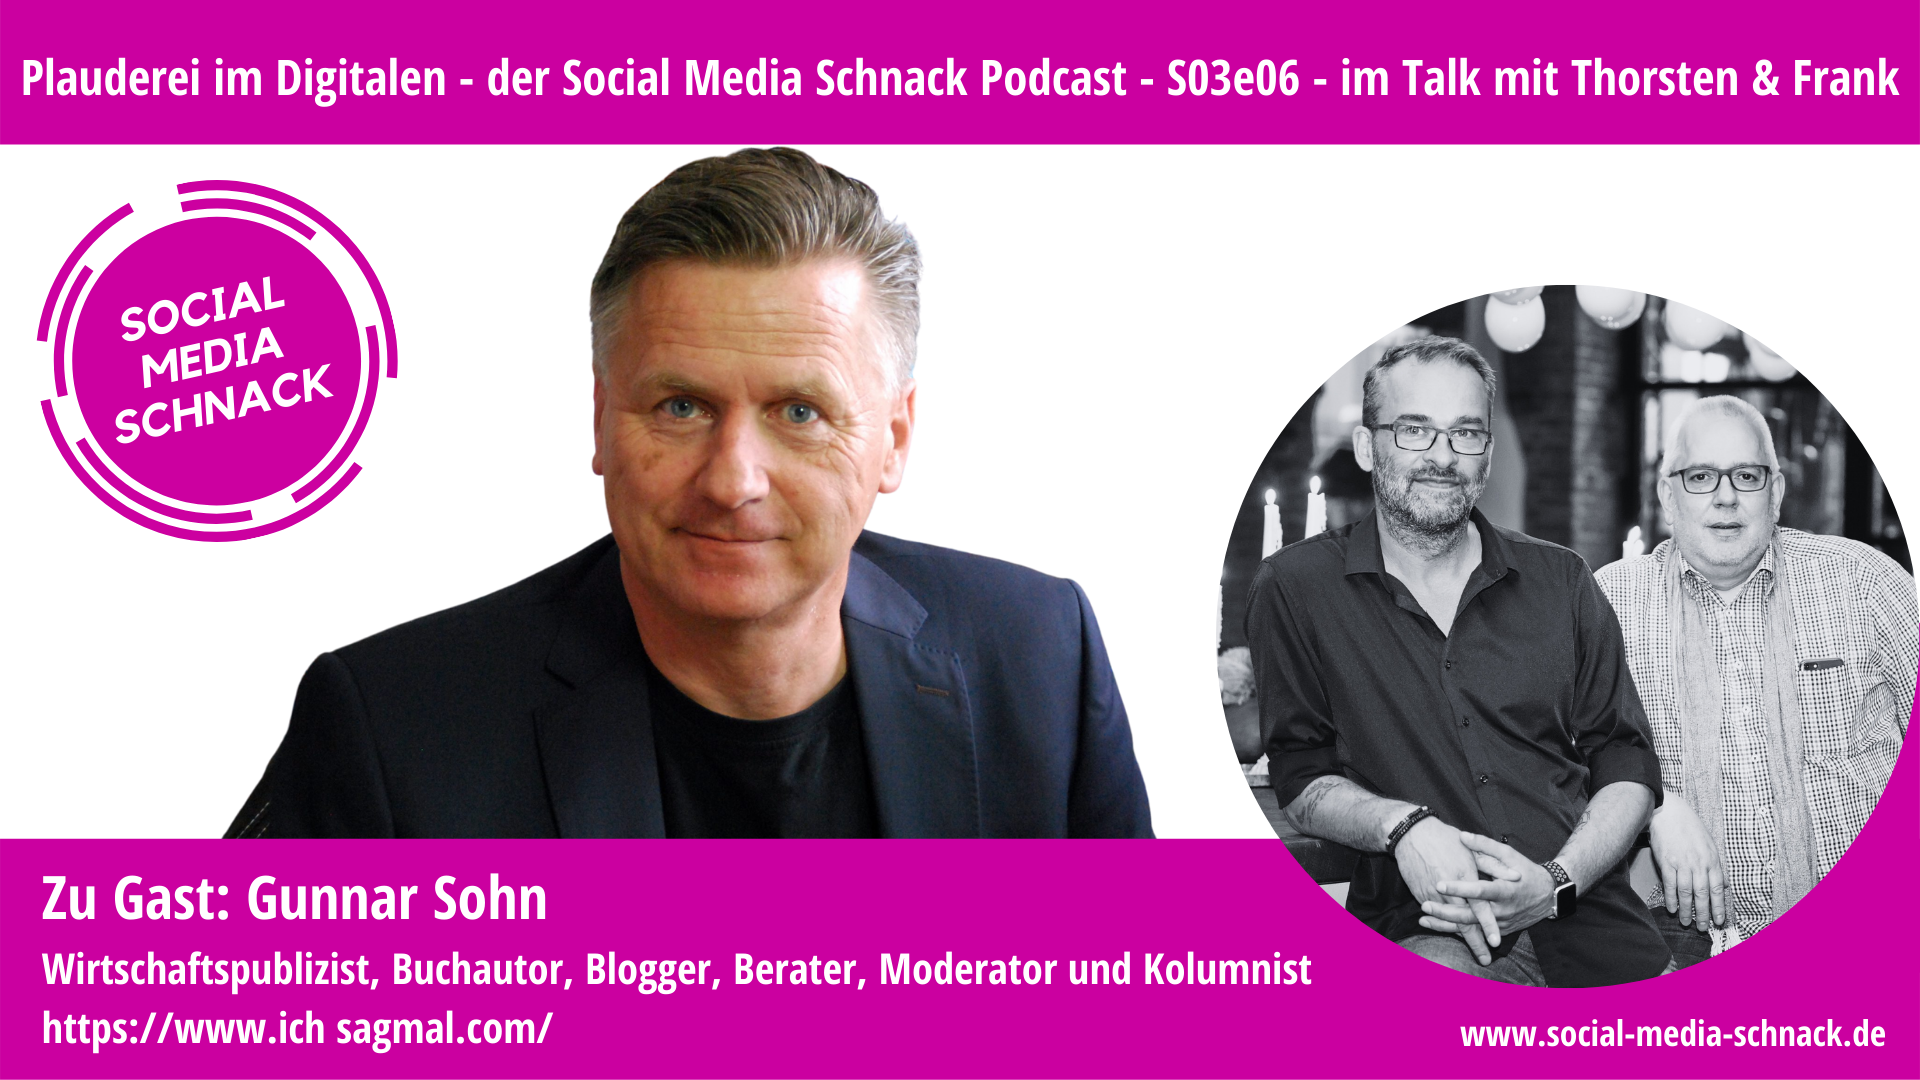 Social Media Schnack – S03e06 – Zu Gast: Gunnar Sohn, ichsagmal.com